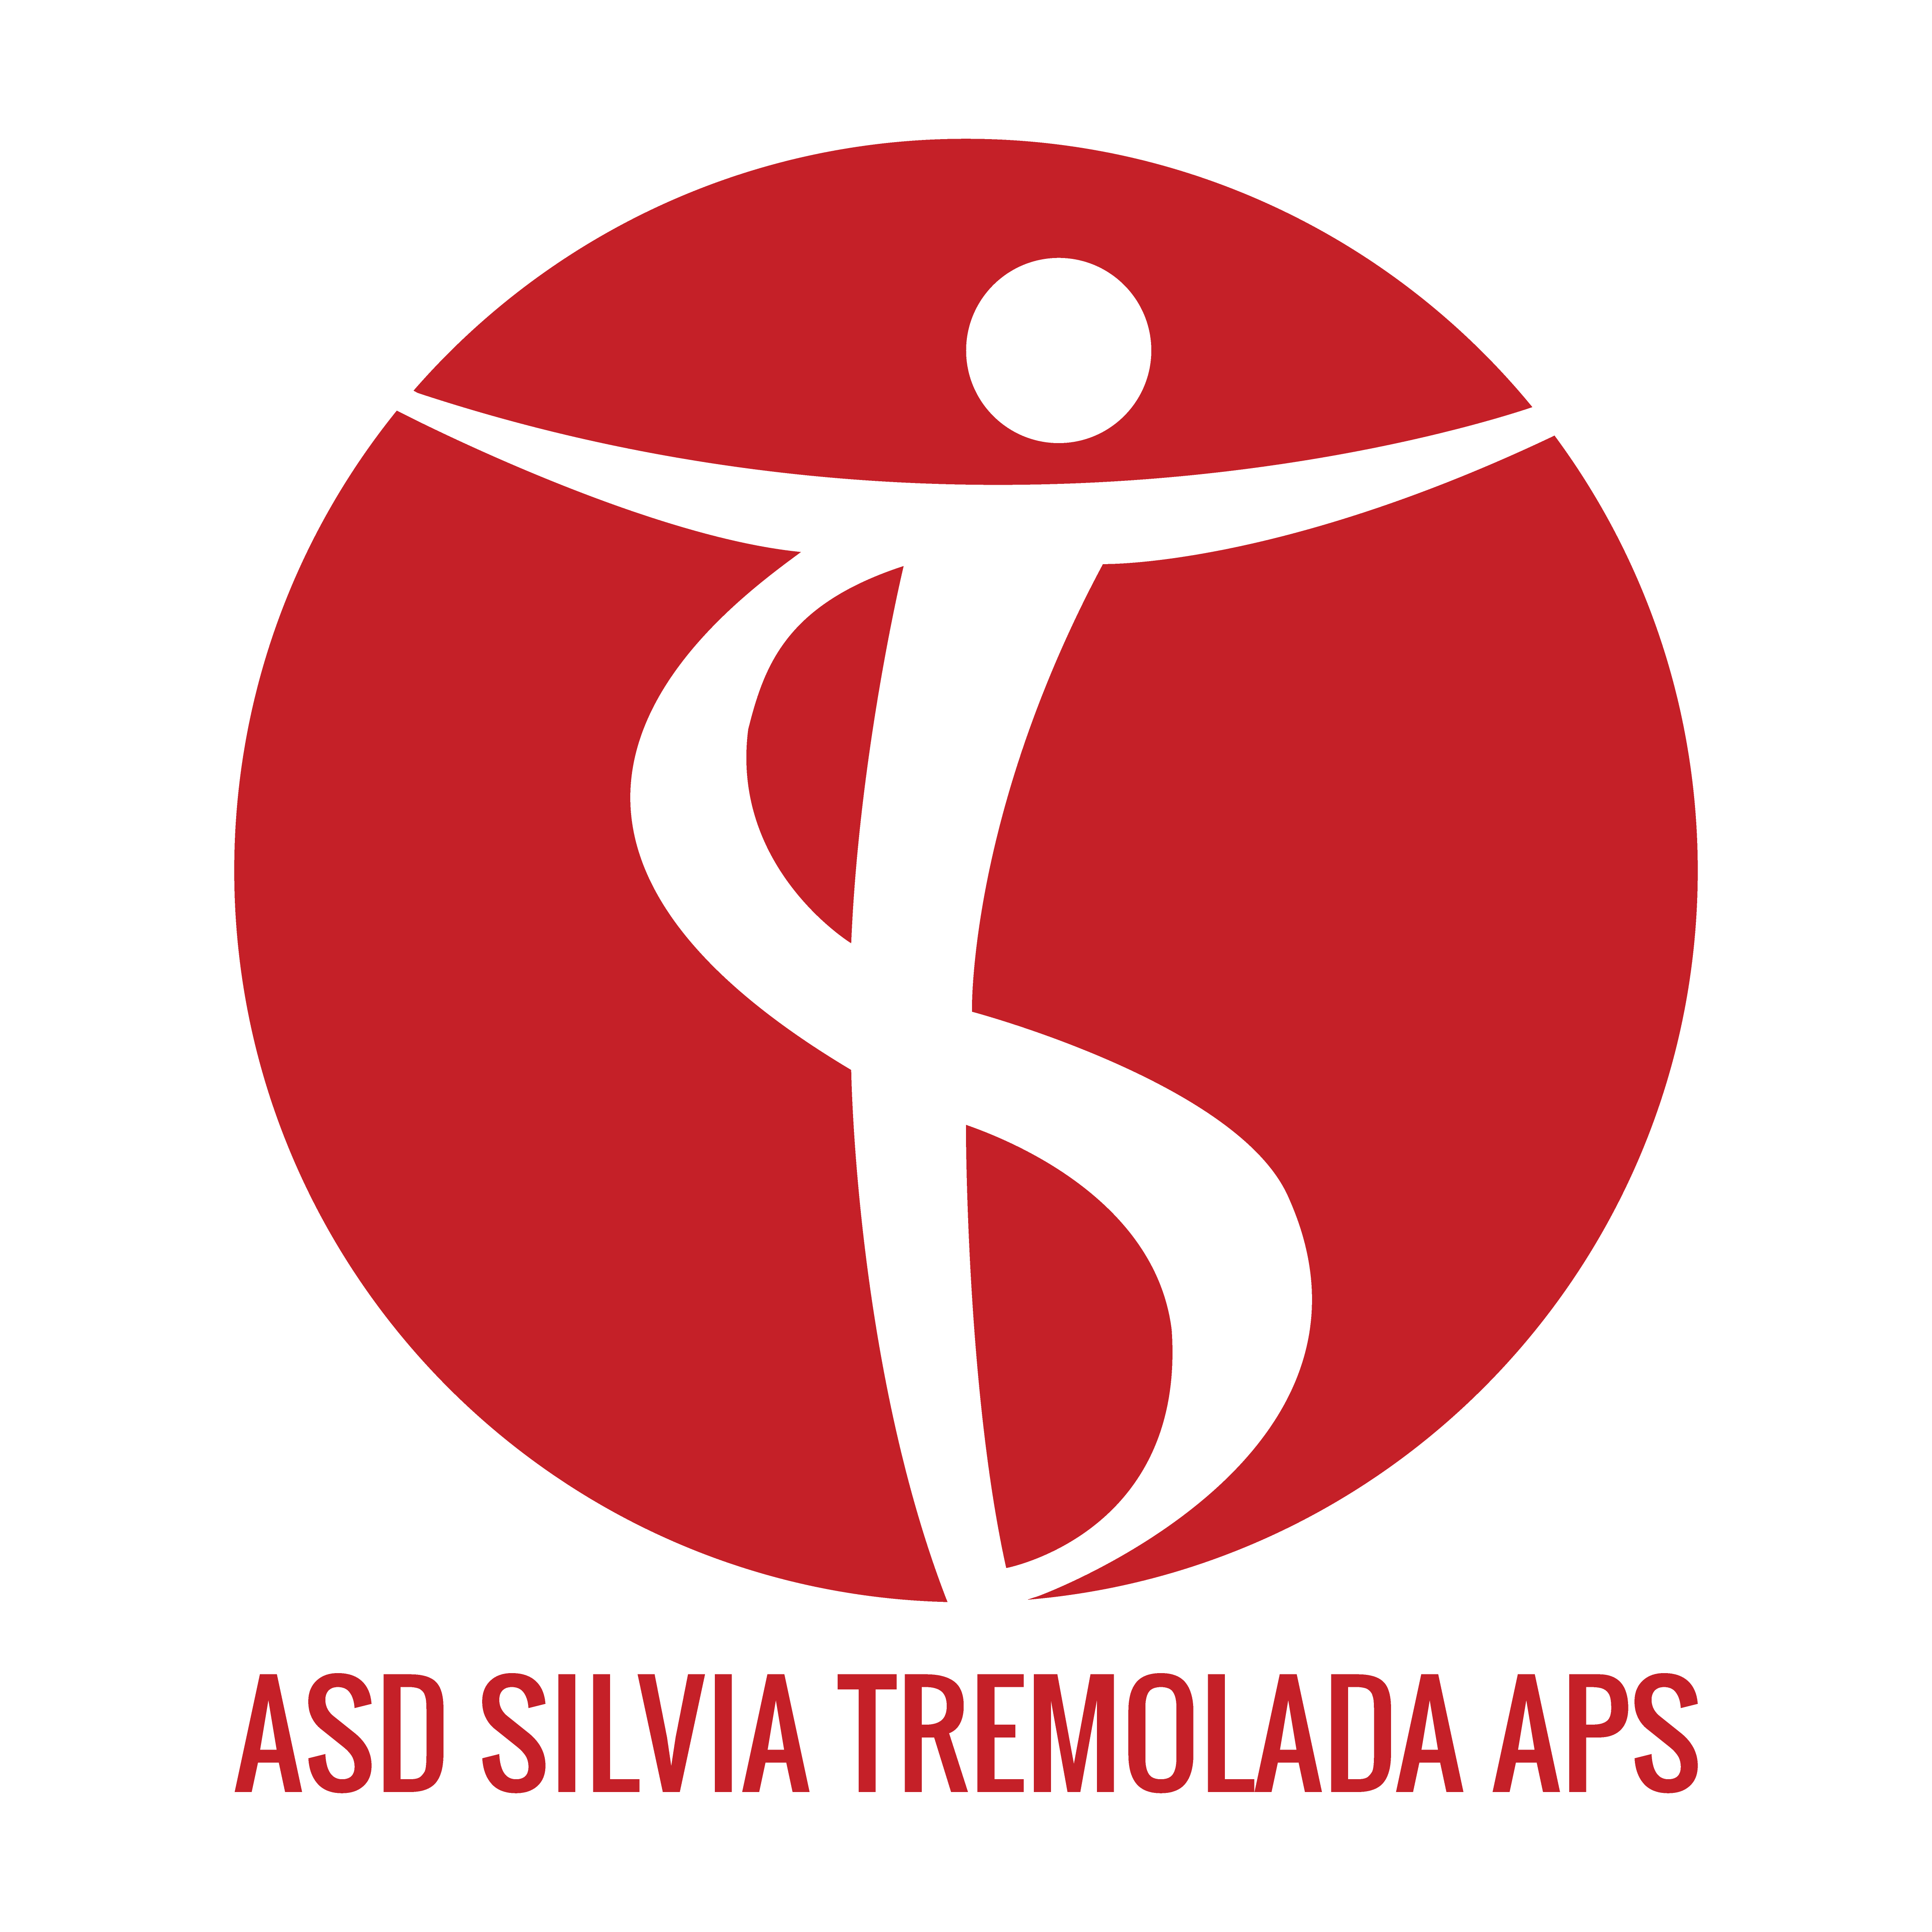 ASD Silvia Tremolada